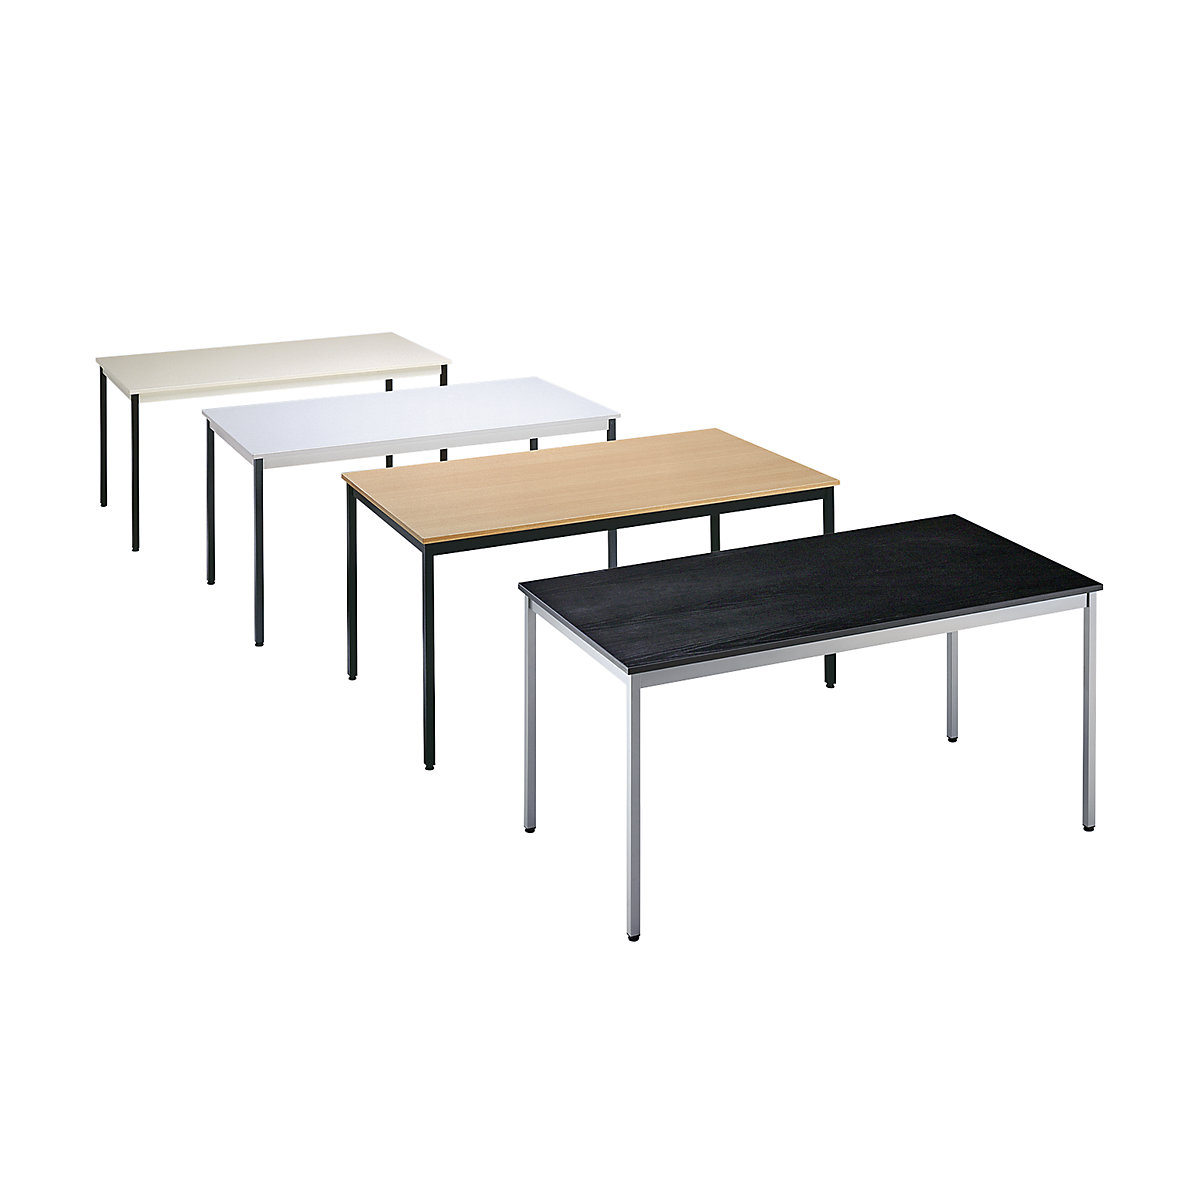 Universele tafel – eurokraft basic, rechthoekig, h x b x d = 740 x 700 x 600 mm, blad ahornhoutdecor, frame blank aluminiumkleurig-1